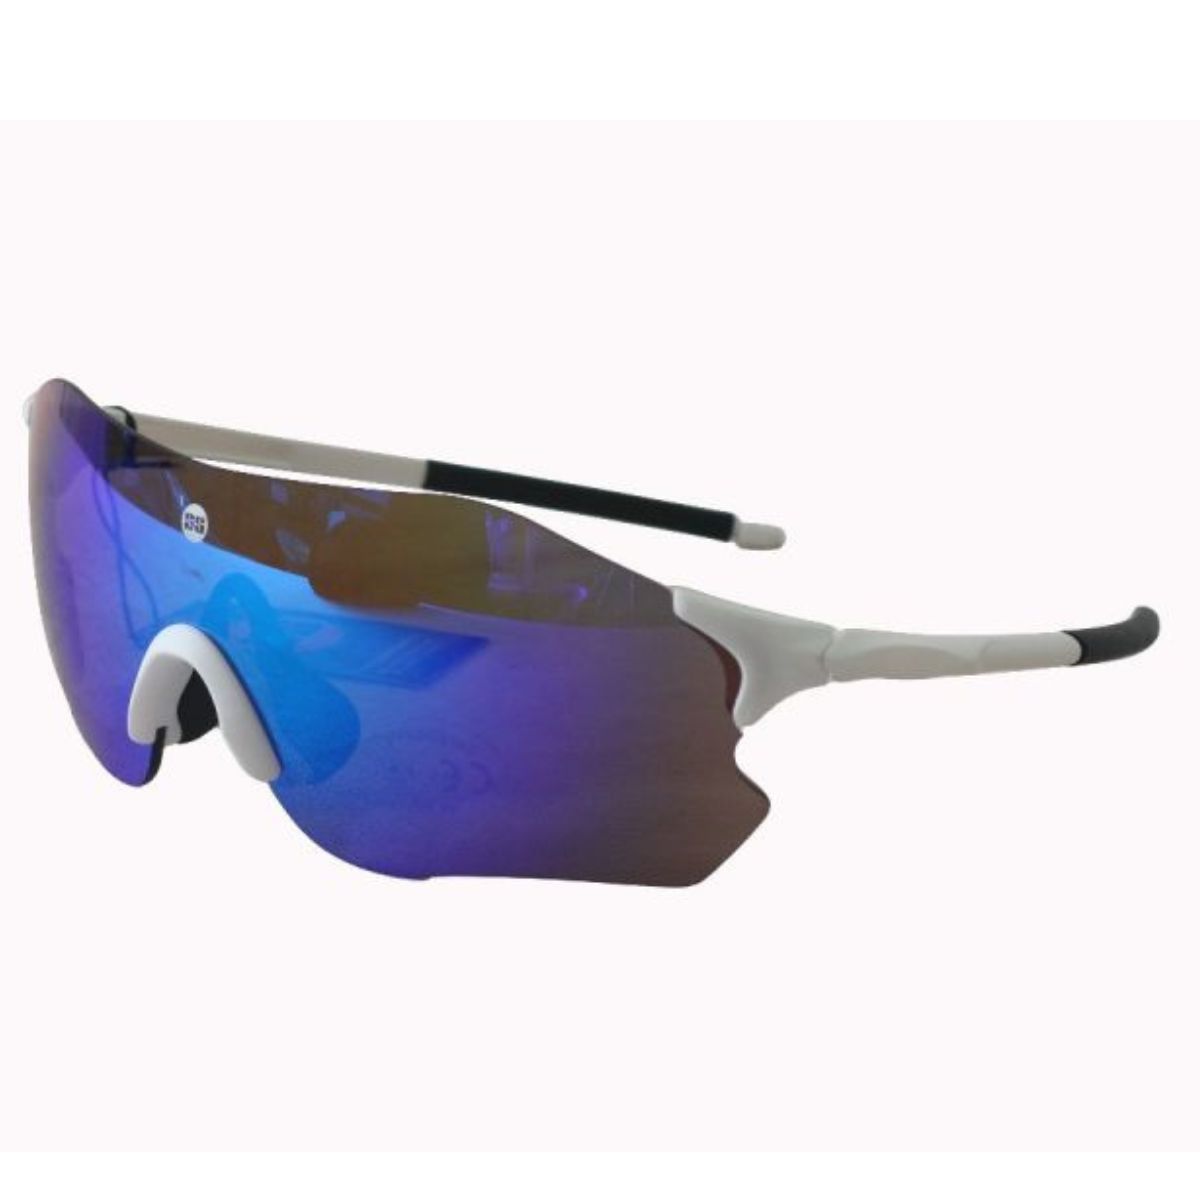 SS Legacy pro 3.0 sports Sunglasses